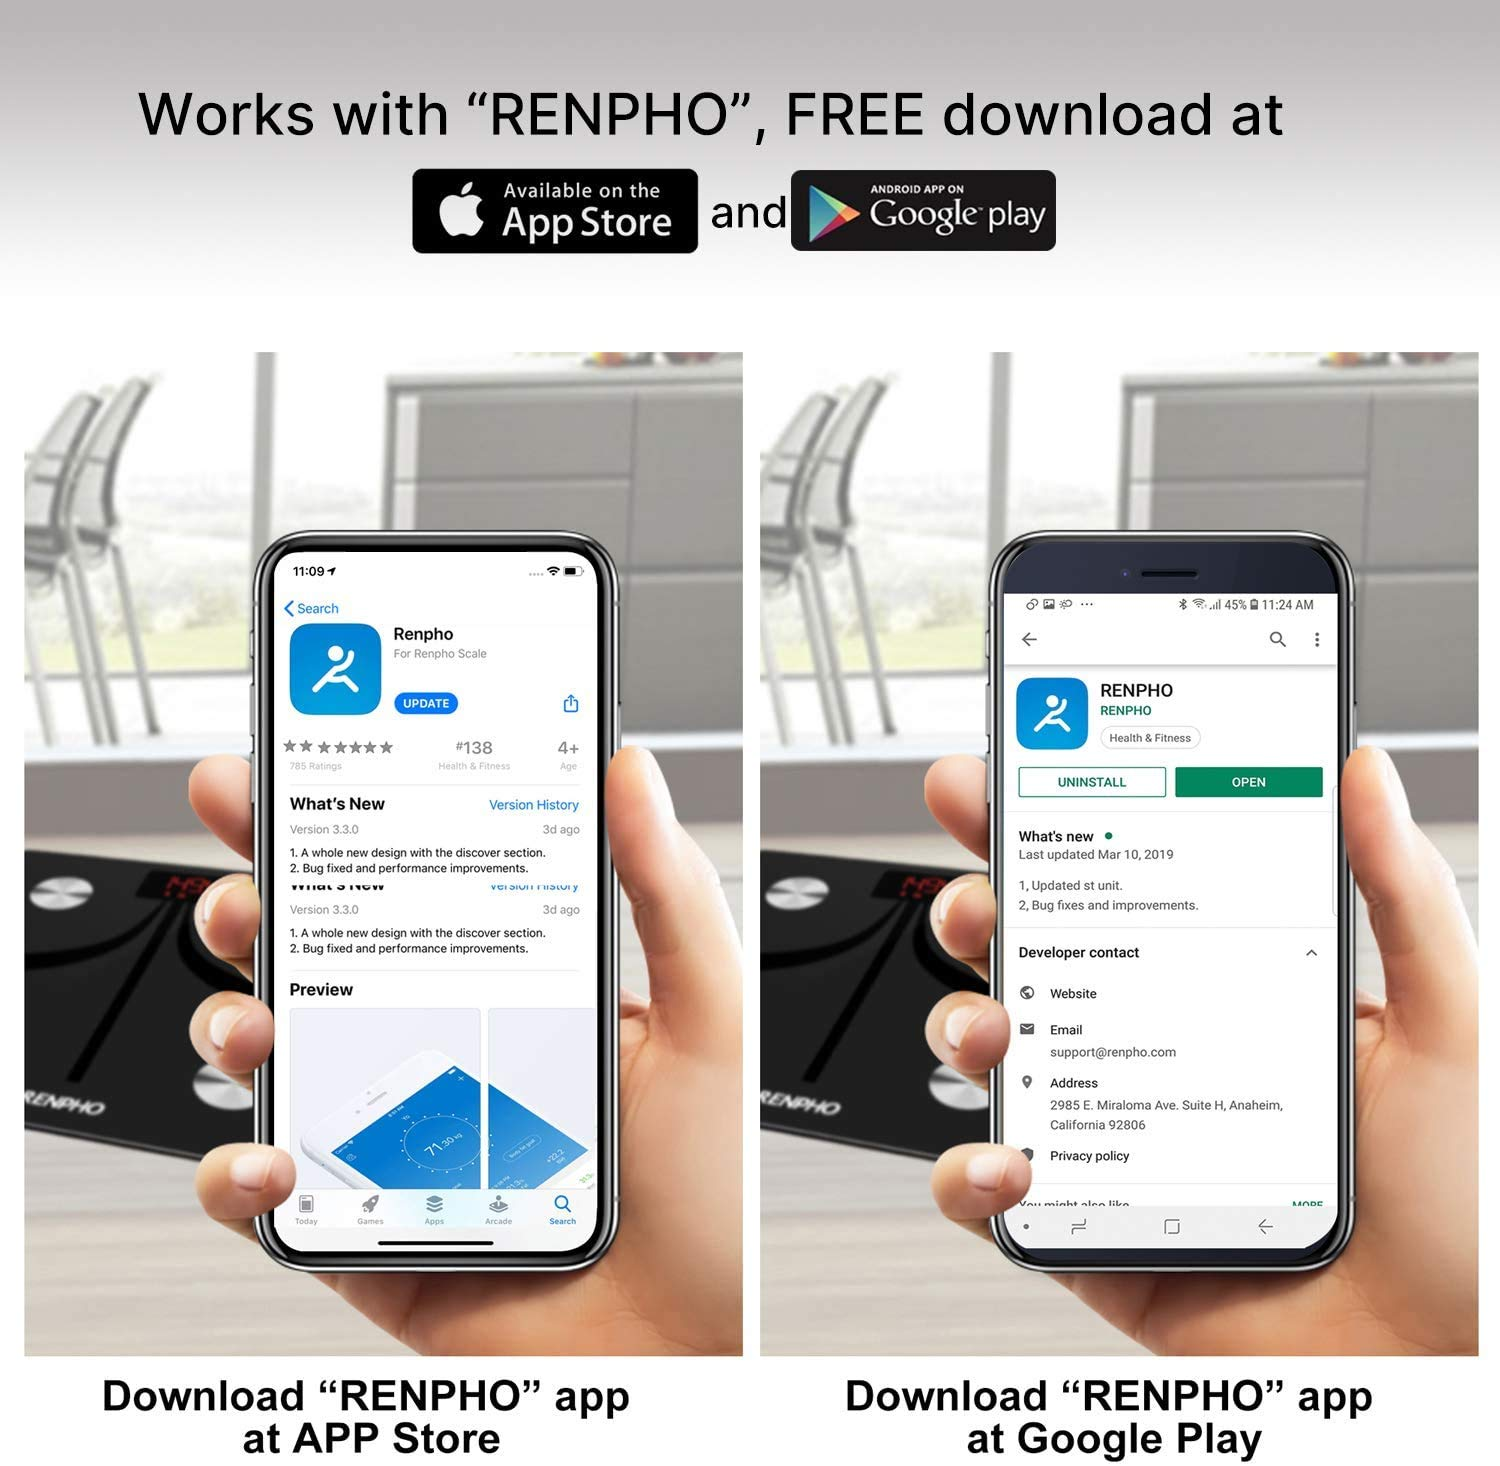 RENPHO Bluetooth Personenwaage Körperanalysewaagen mit App Körperfettwaage